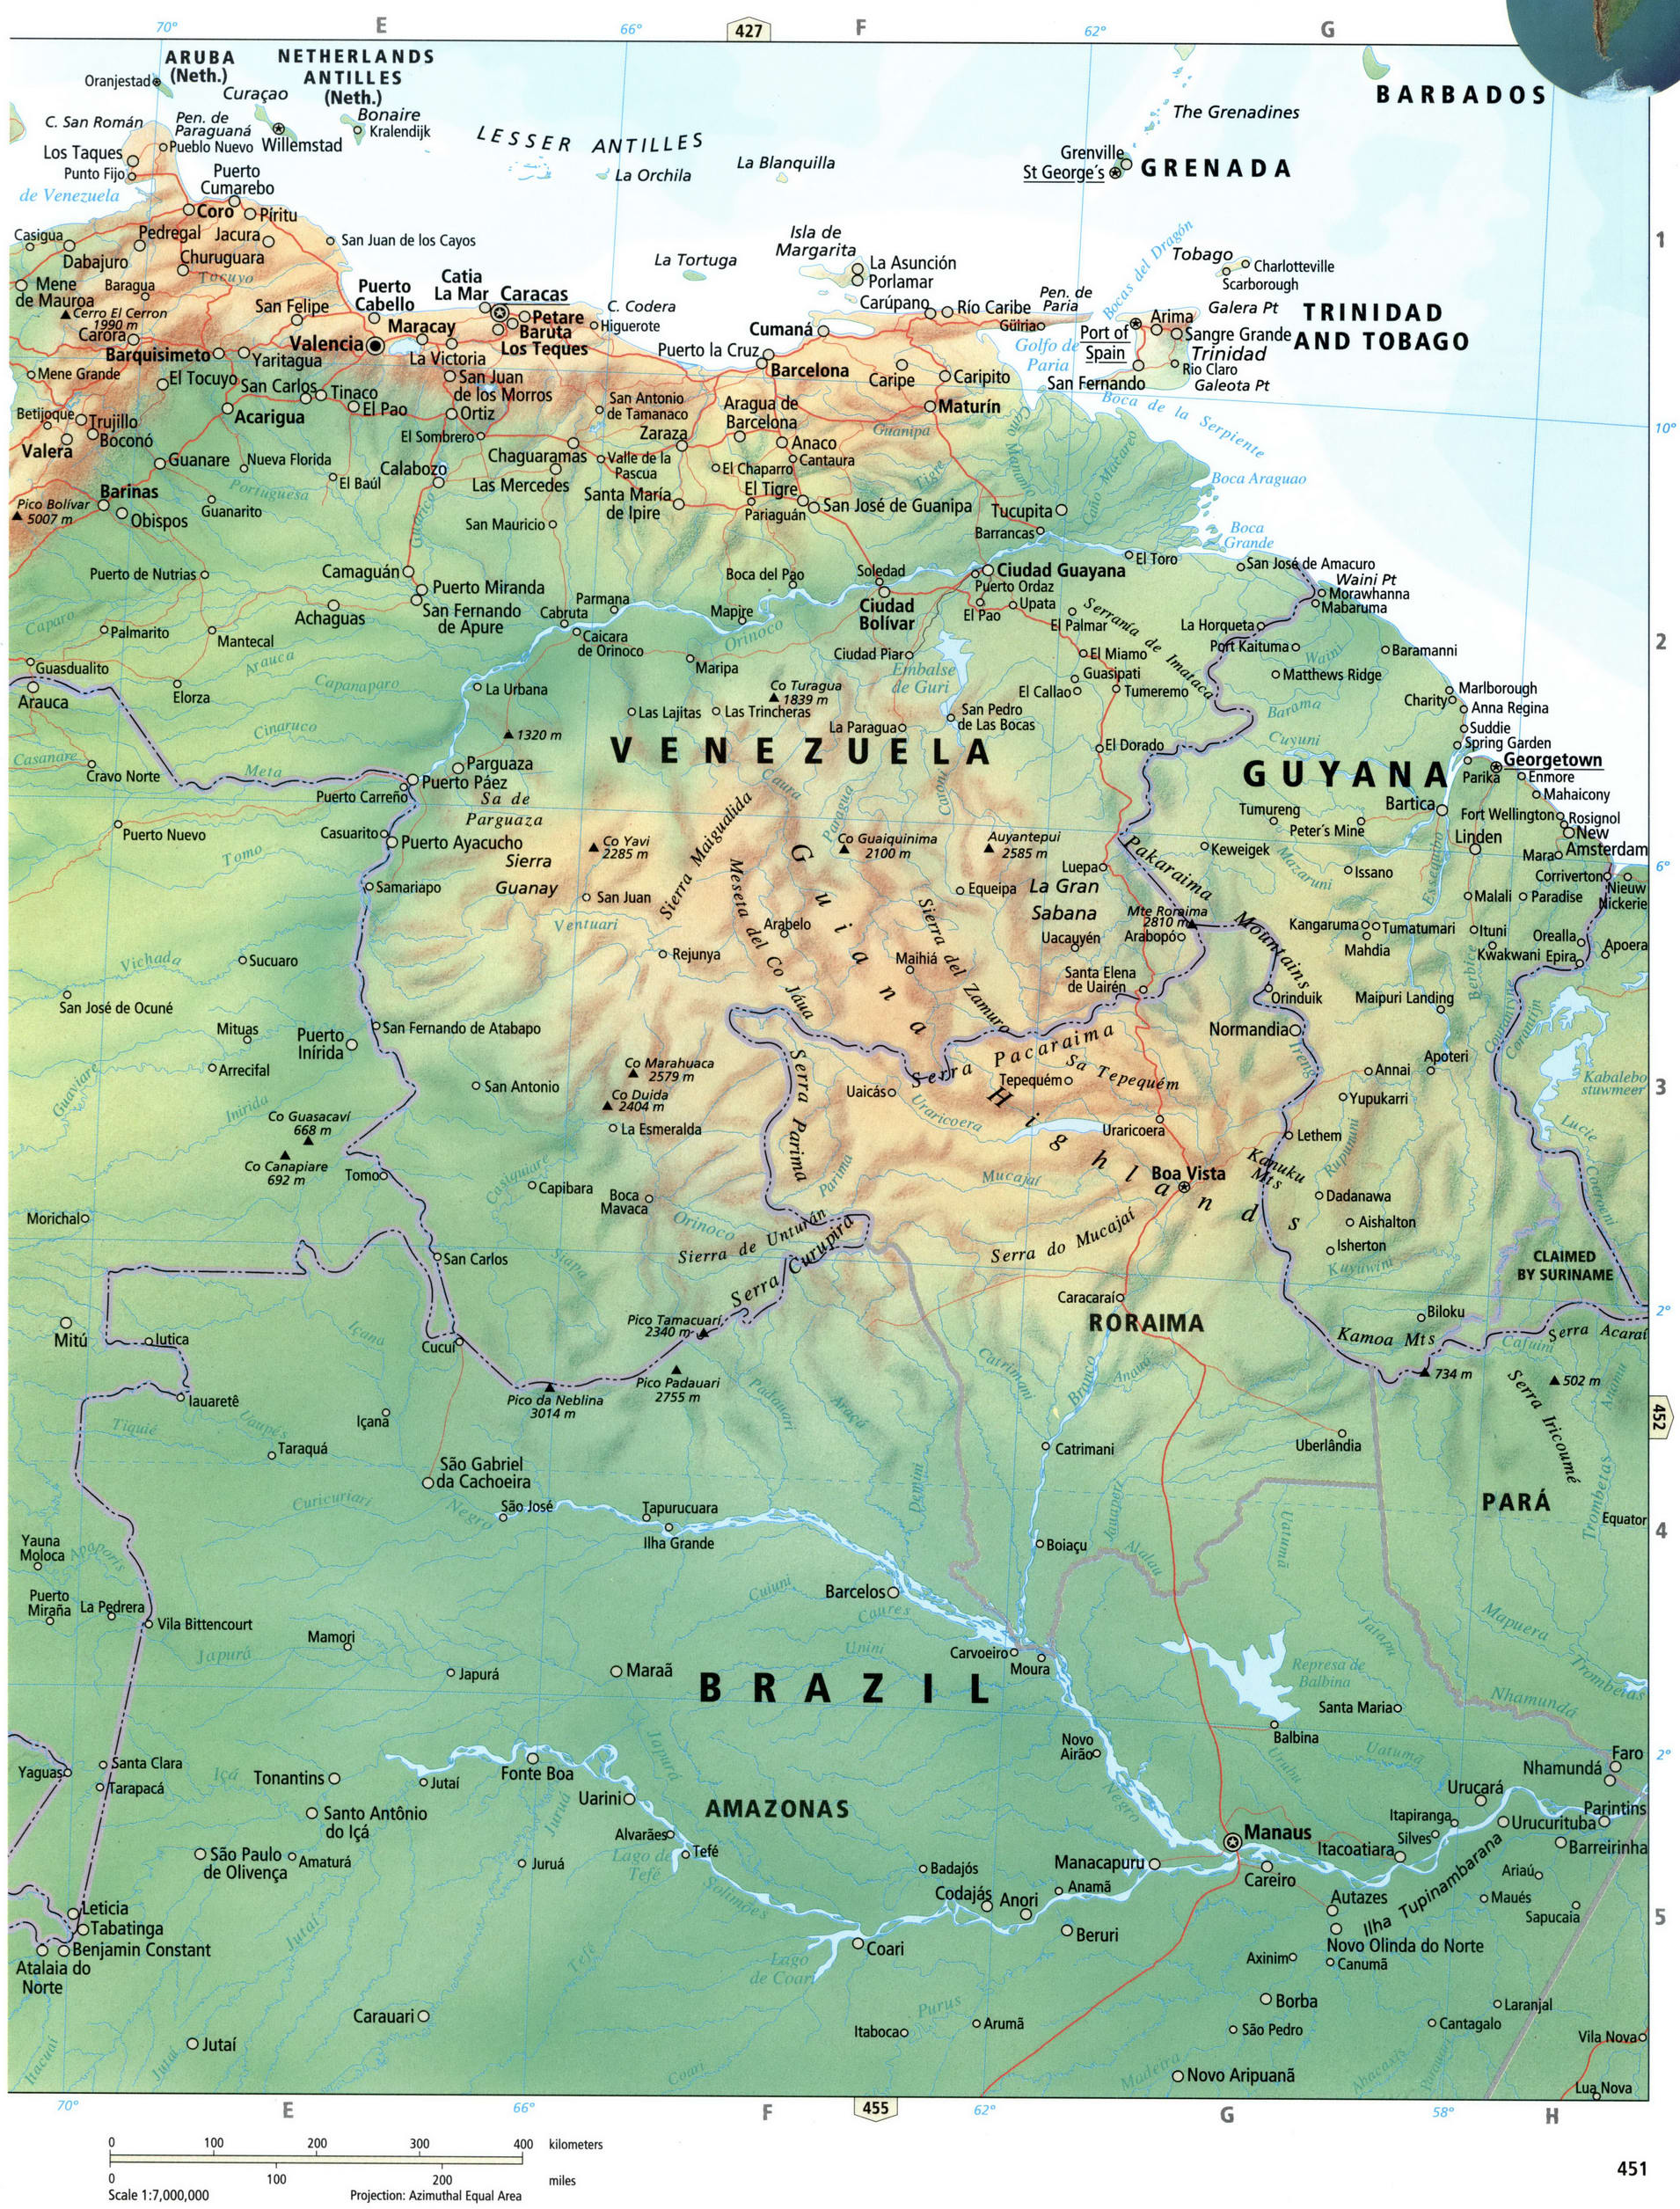 Venezuela and Guyana map